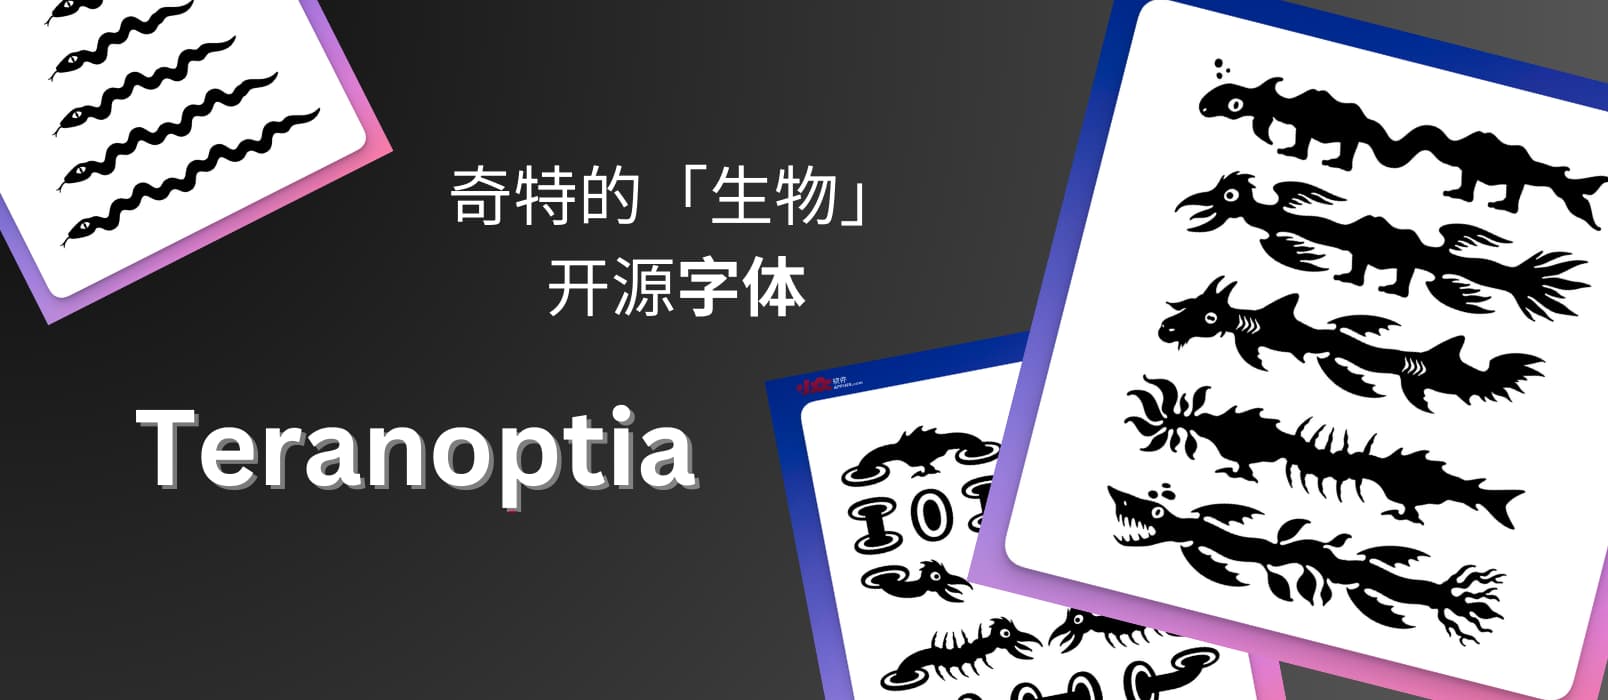 Teranoptia - 一个奇特的「生物组合体」开源字体